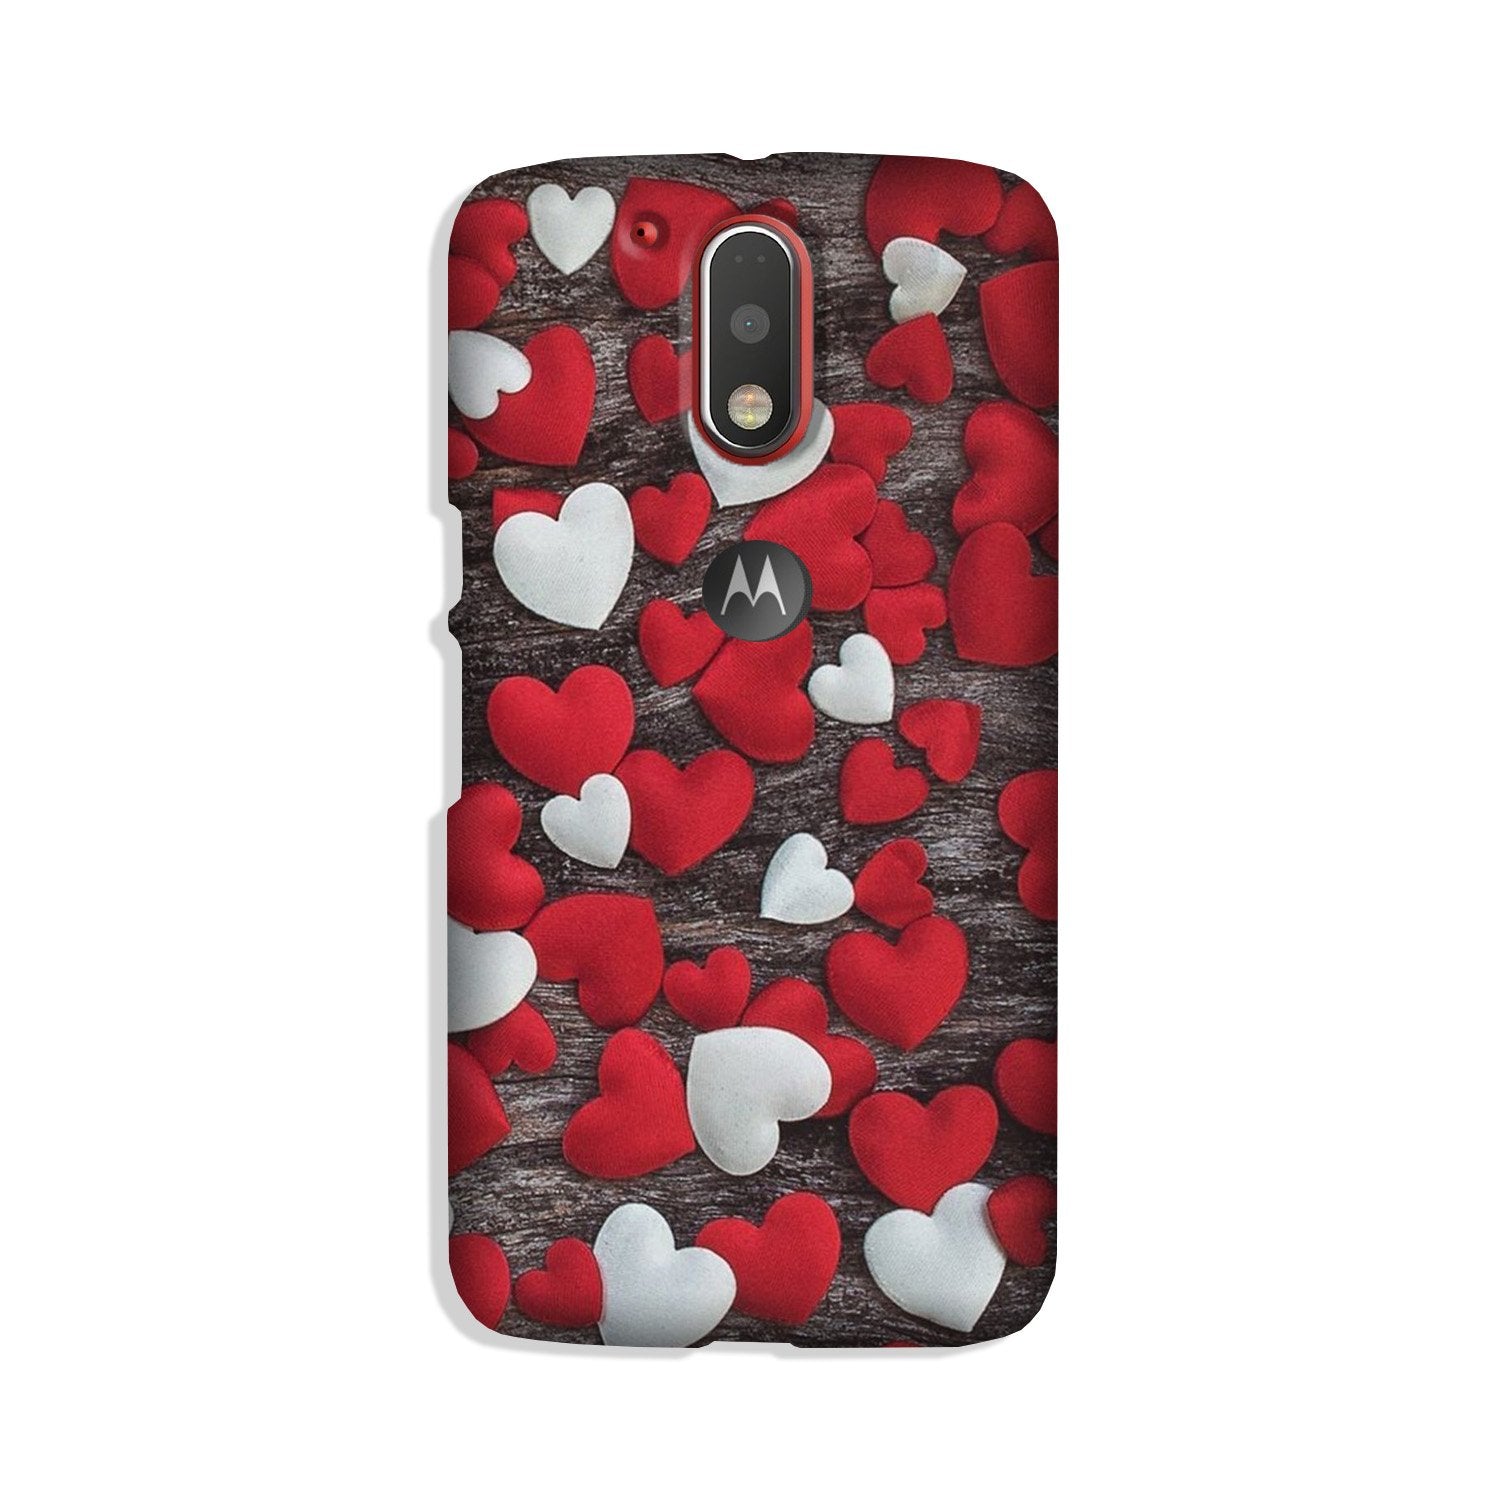 Red White Hearts Case for Moto G4 Plus(Design - 105)